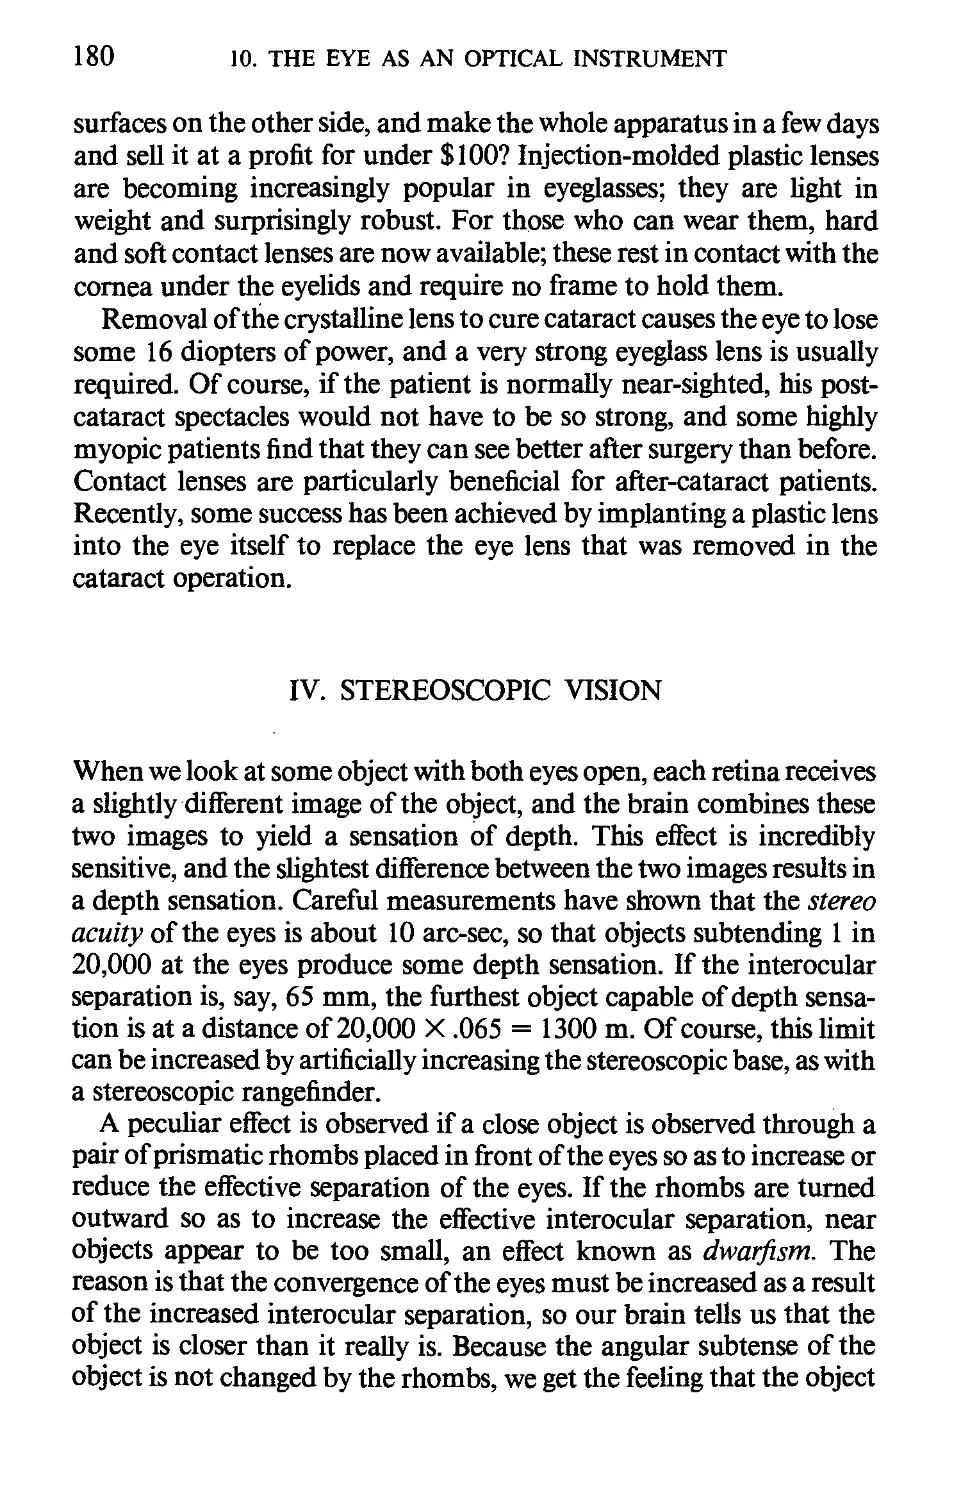 IV. Stereoscopic Vision